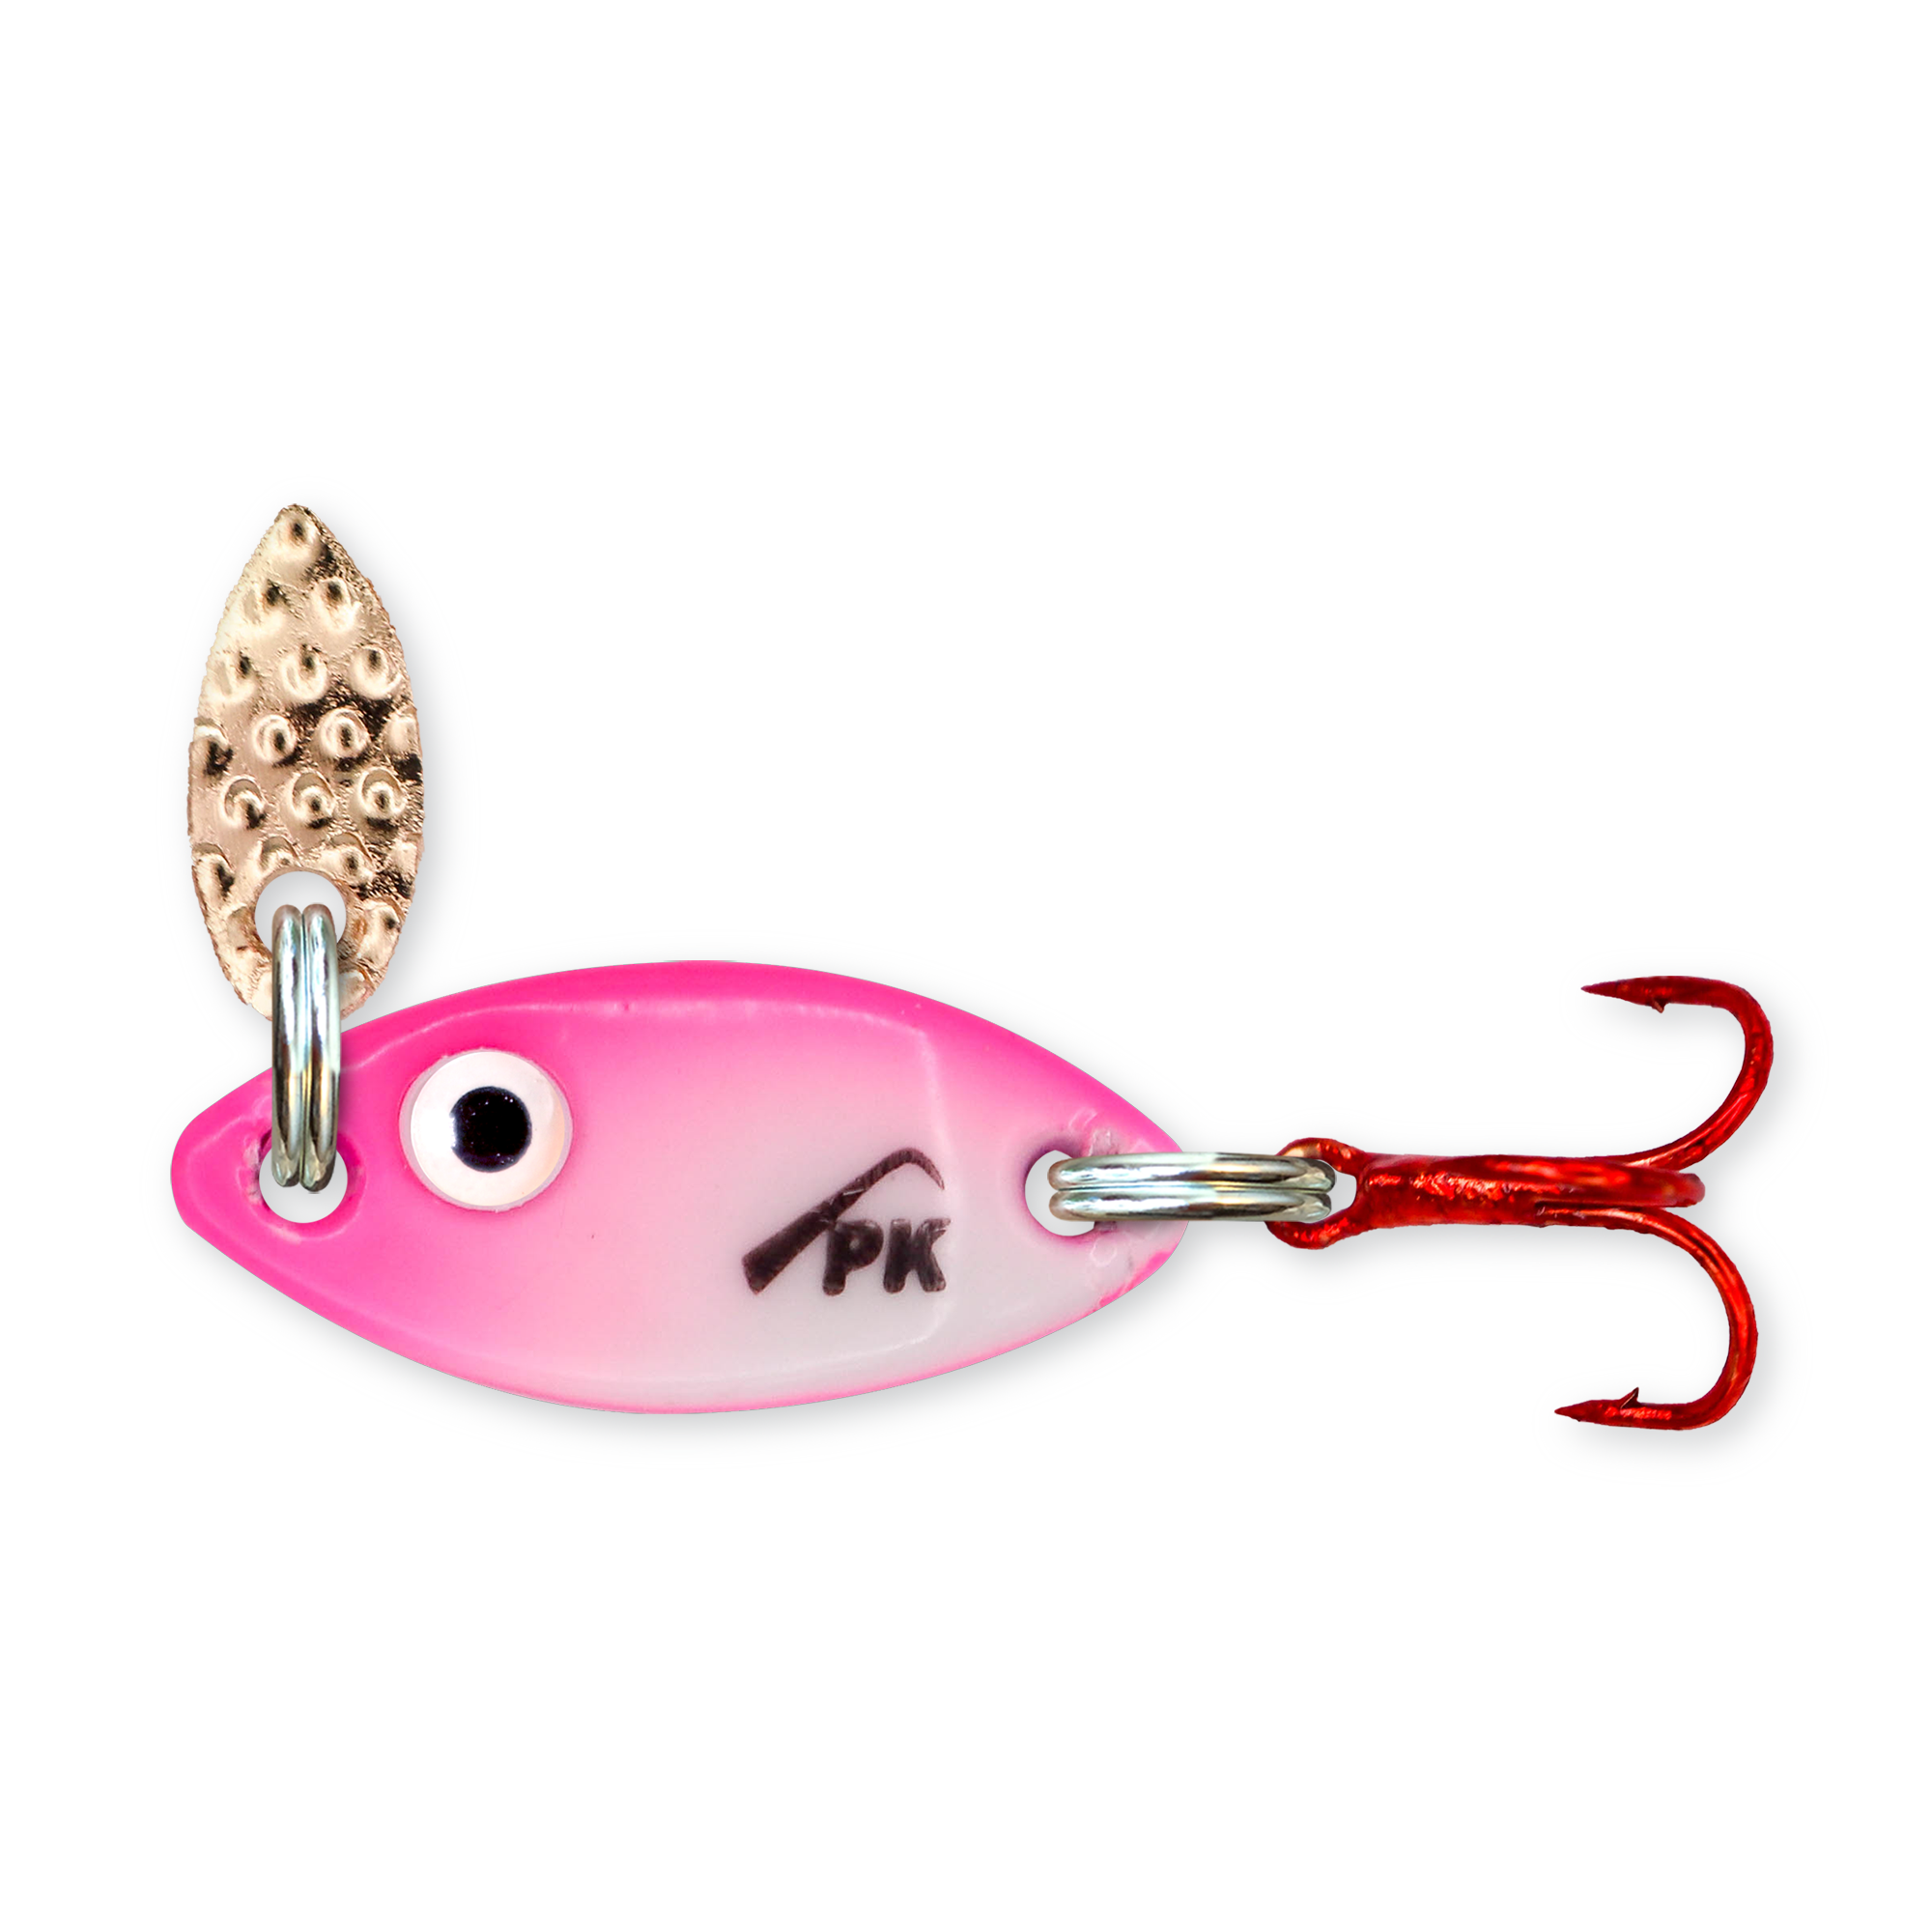 Pk Lures Predator Tungsten Spoon, Pink Pearl